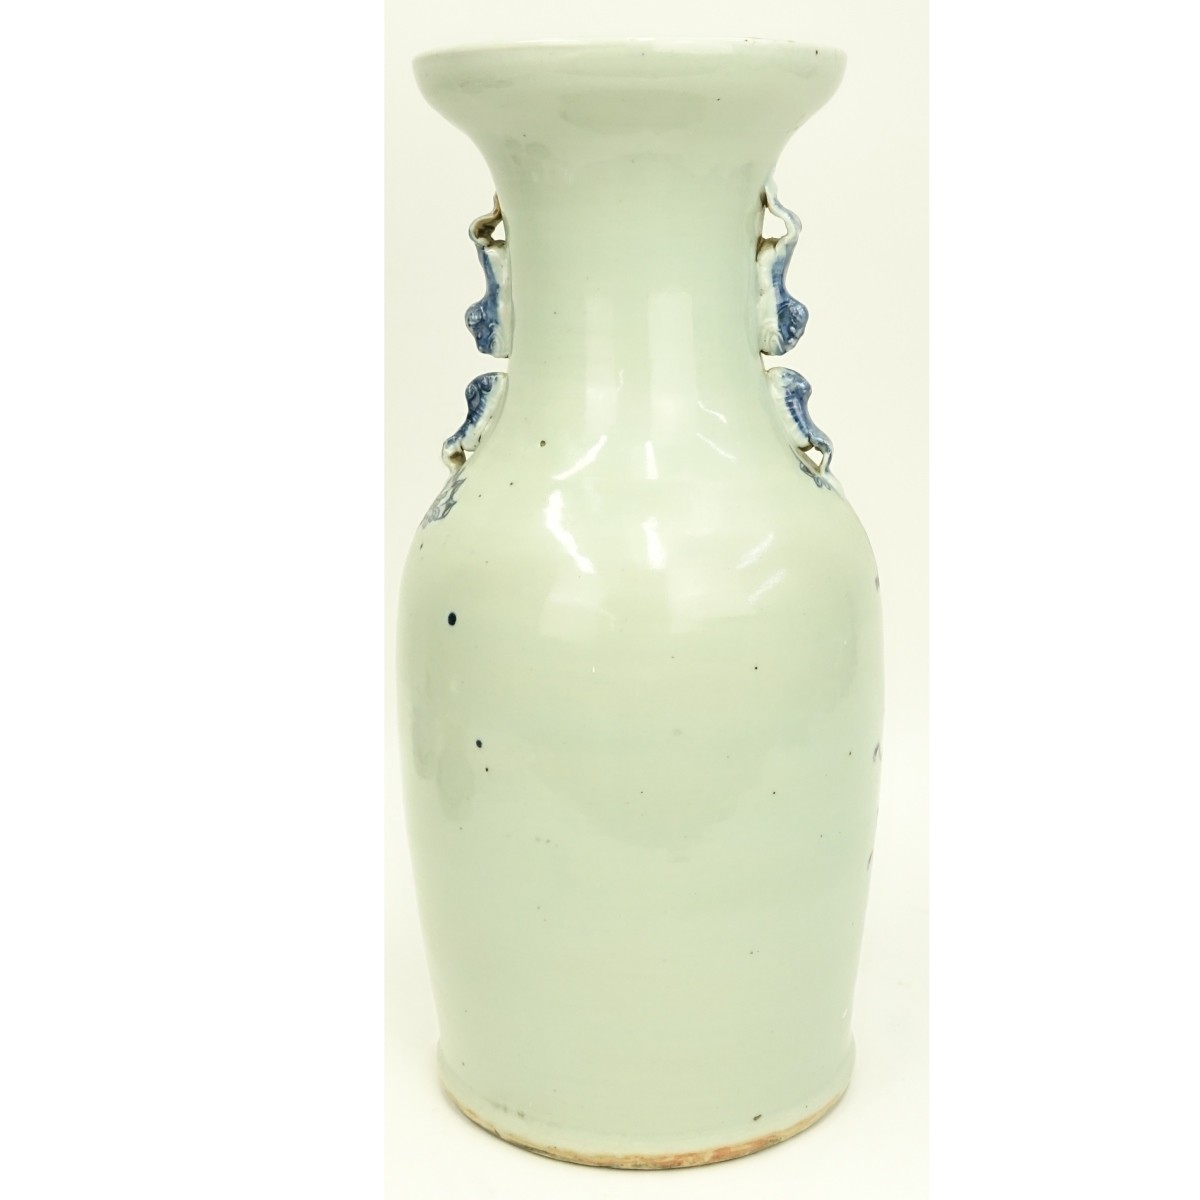 Chinese Blue & White Porcelain Handled Vase